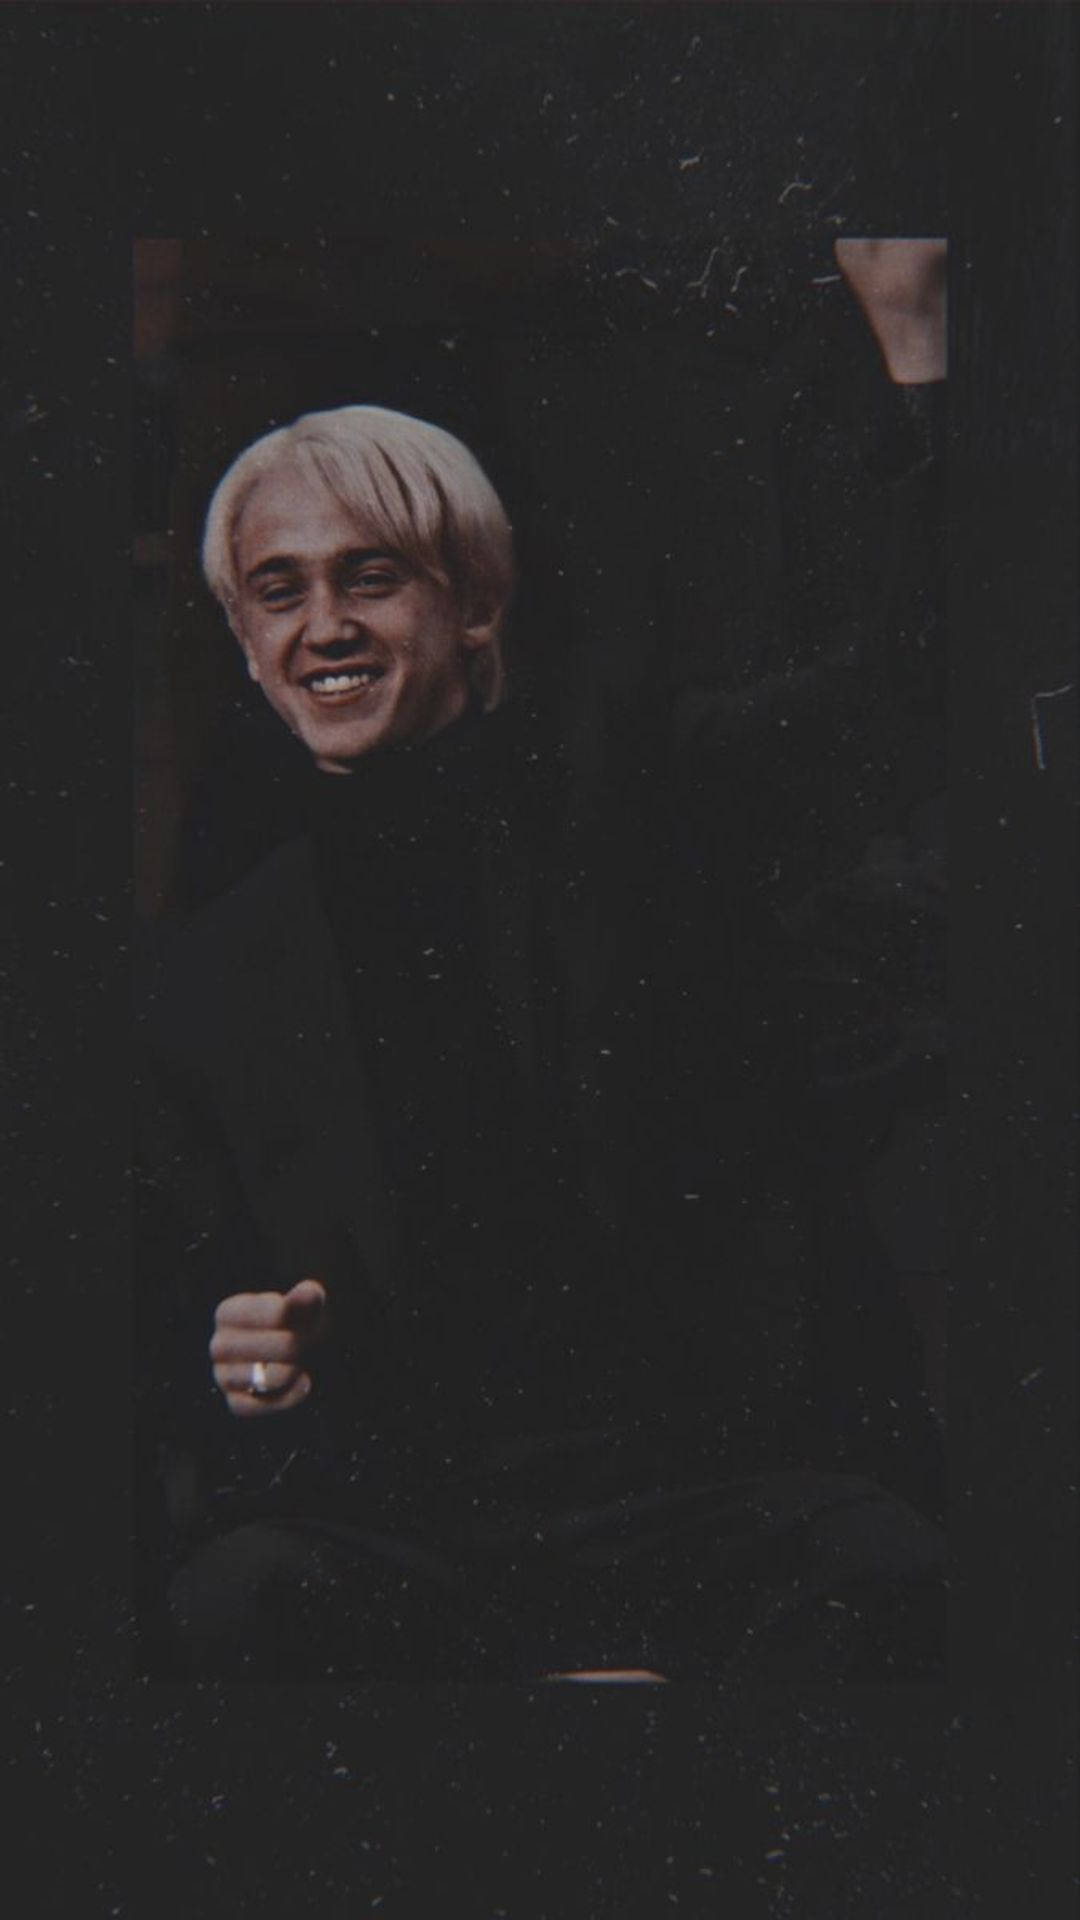 Draco Malfoy Black Smile Aesthetic Wallpaper